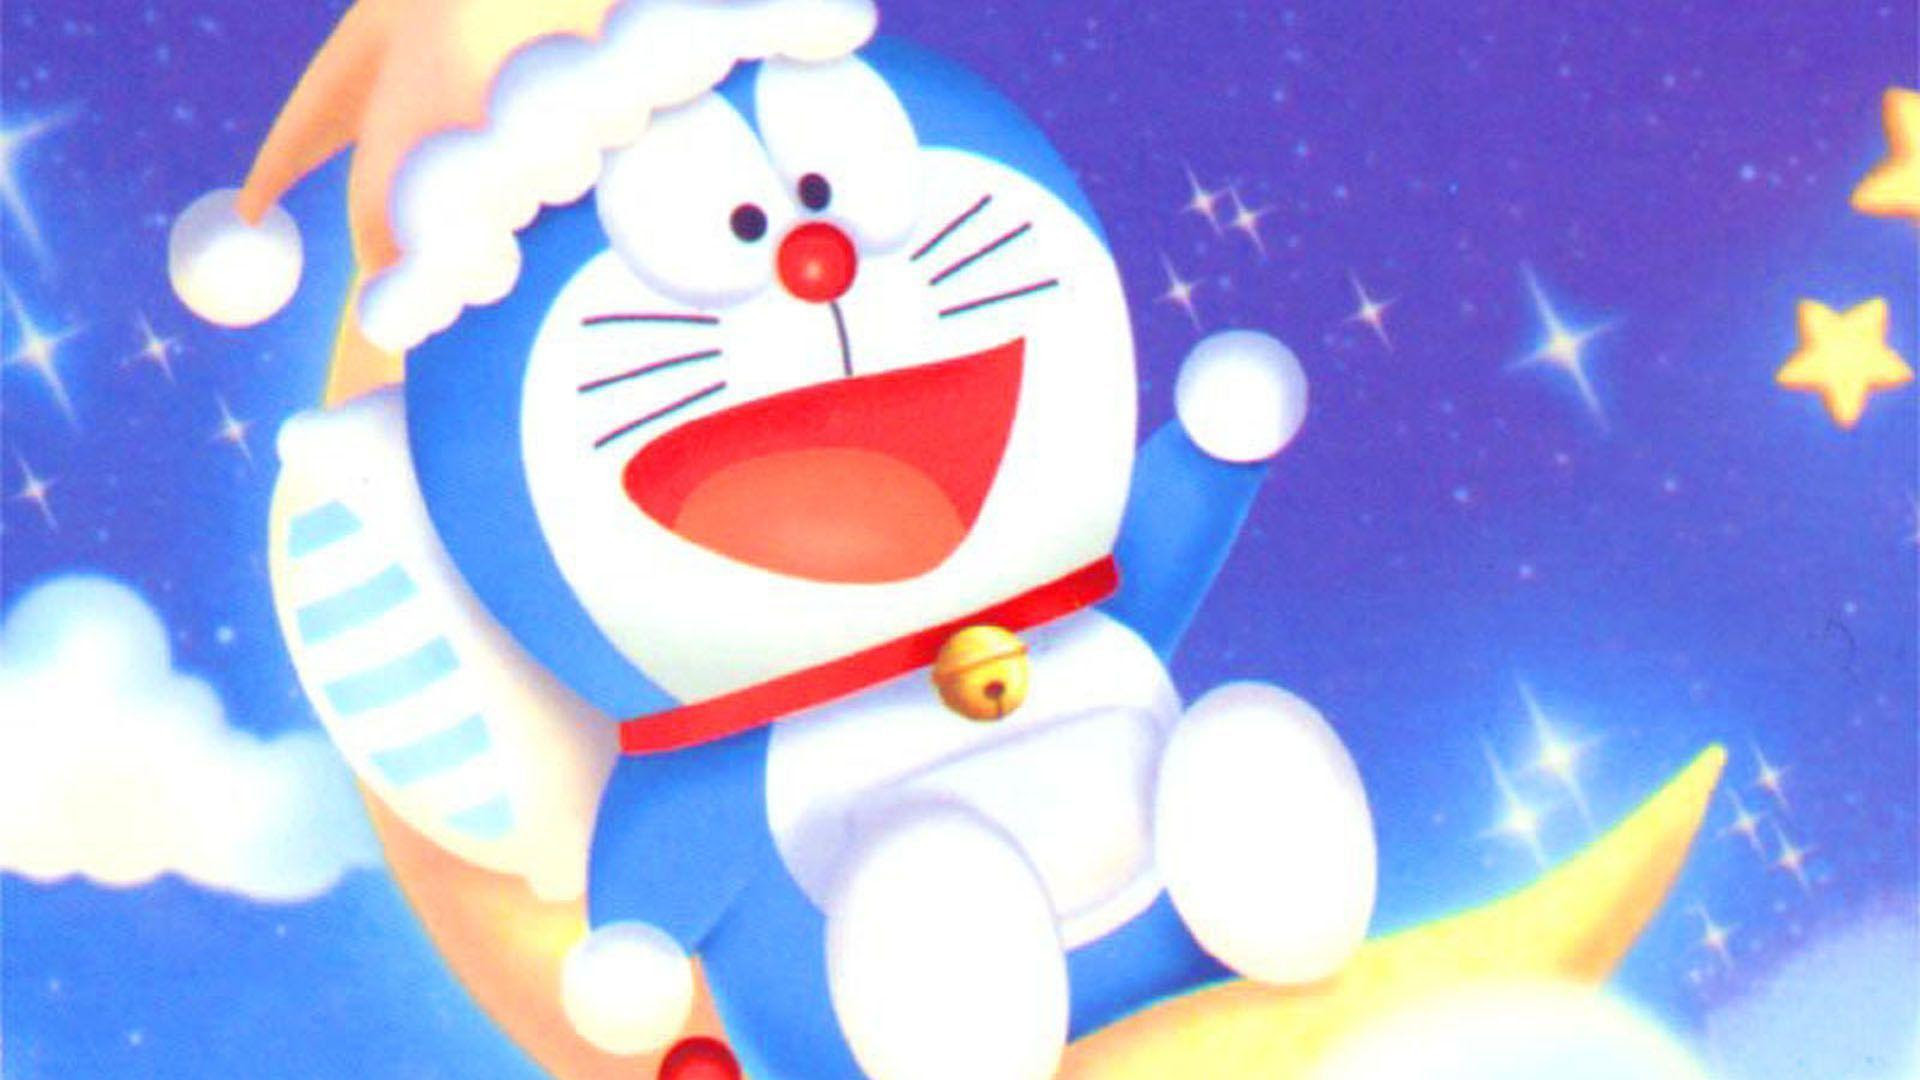 Doraemon 3D Wallpapers 2016 - Wallpaper Cave